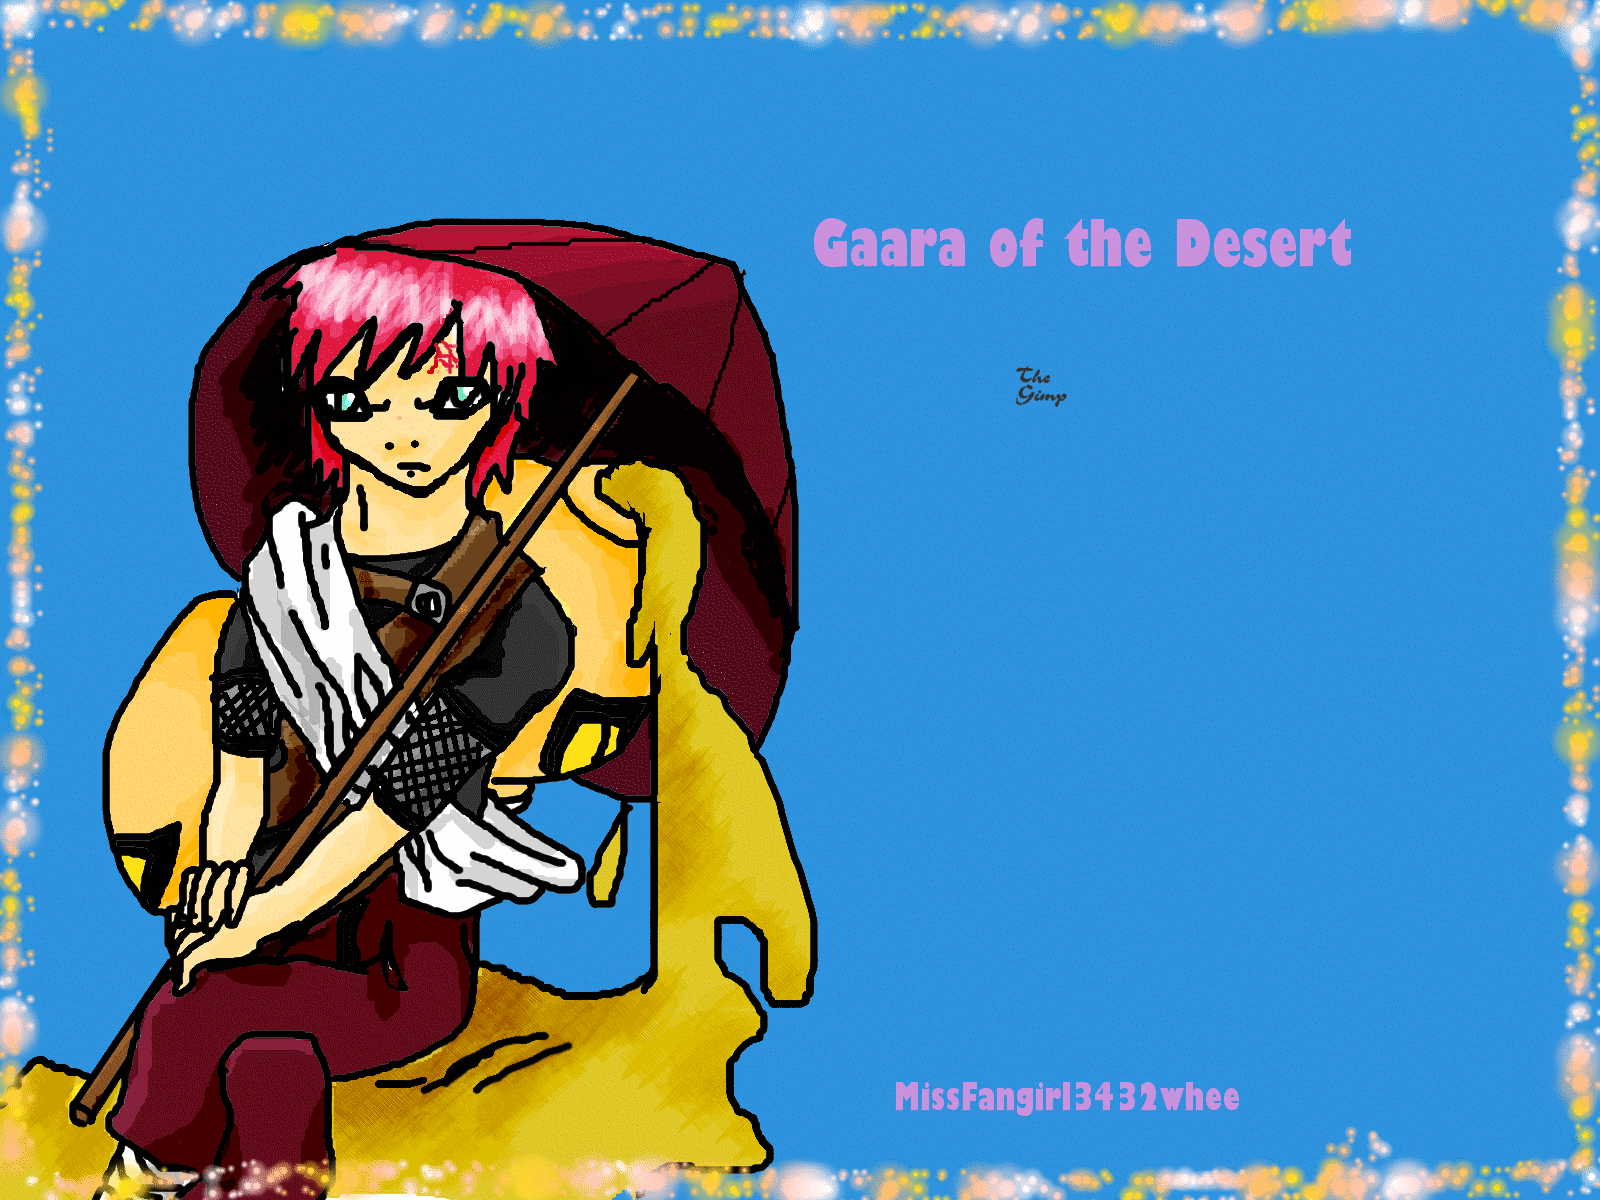 Gaara of the Desert by missFangirl3432whee